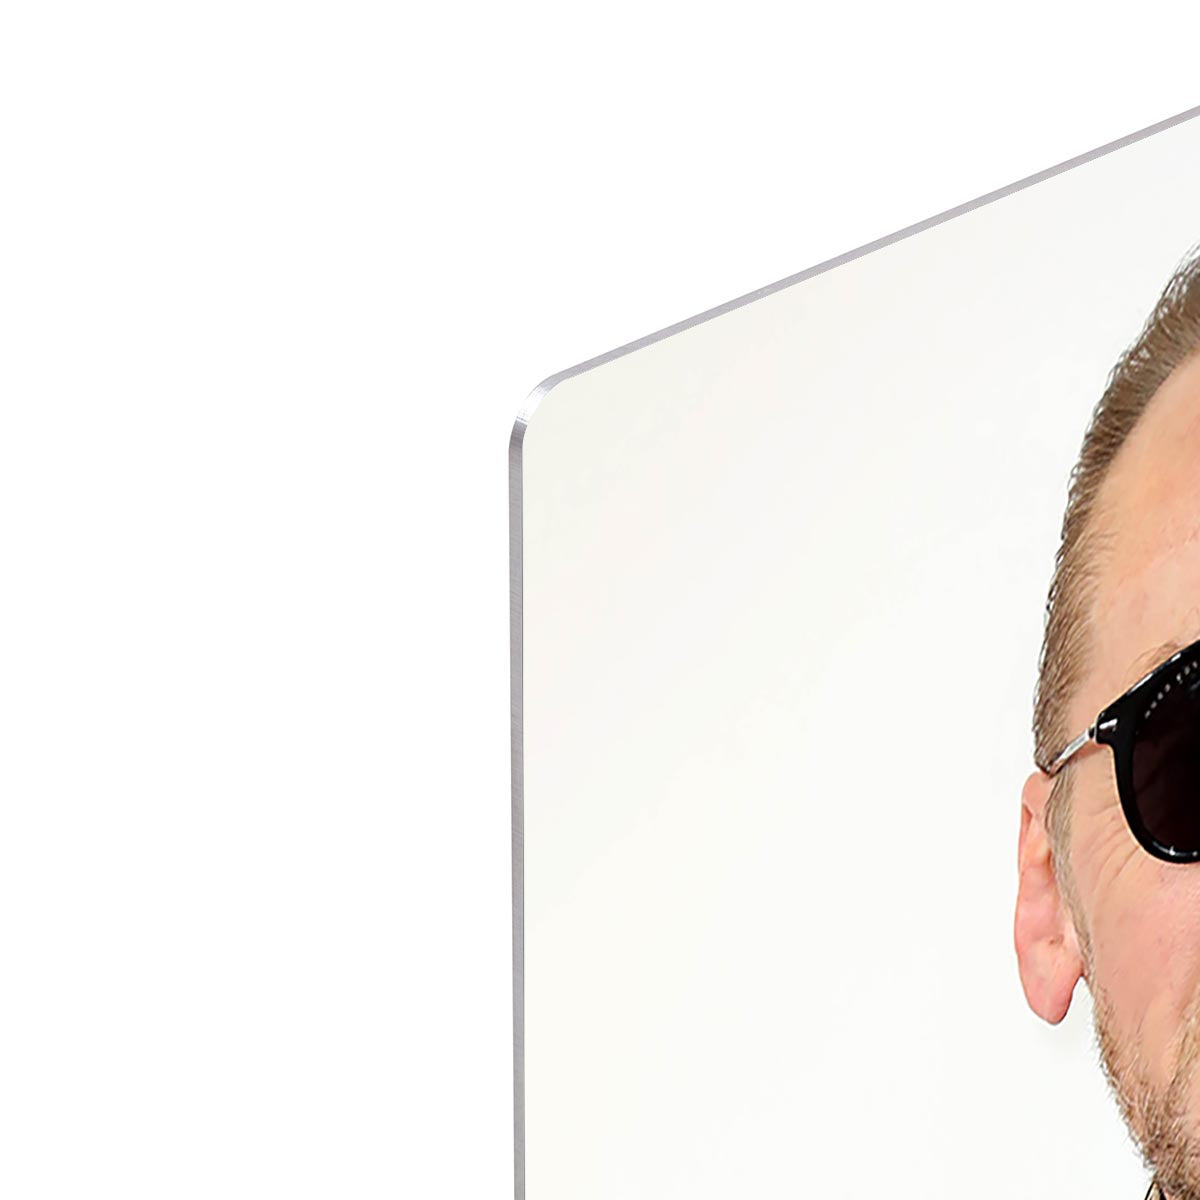 Simon Pegg in sunglasses HD Metal Print